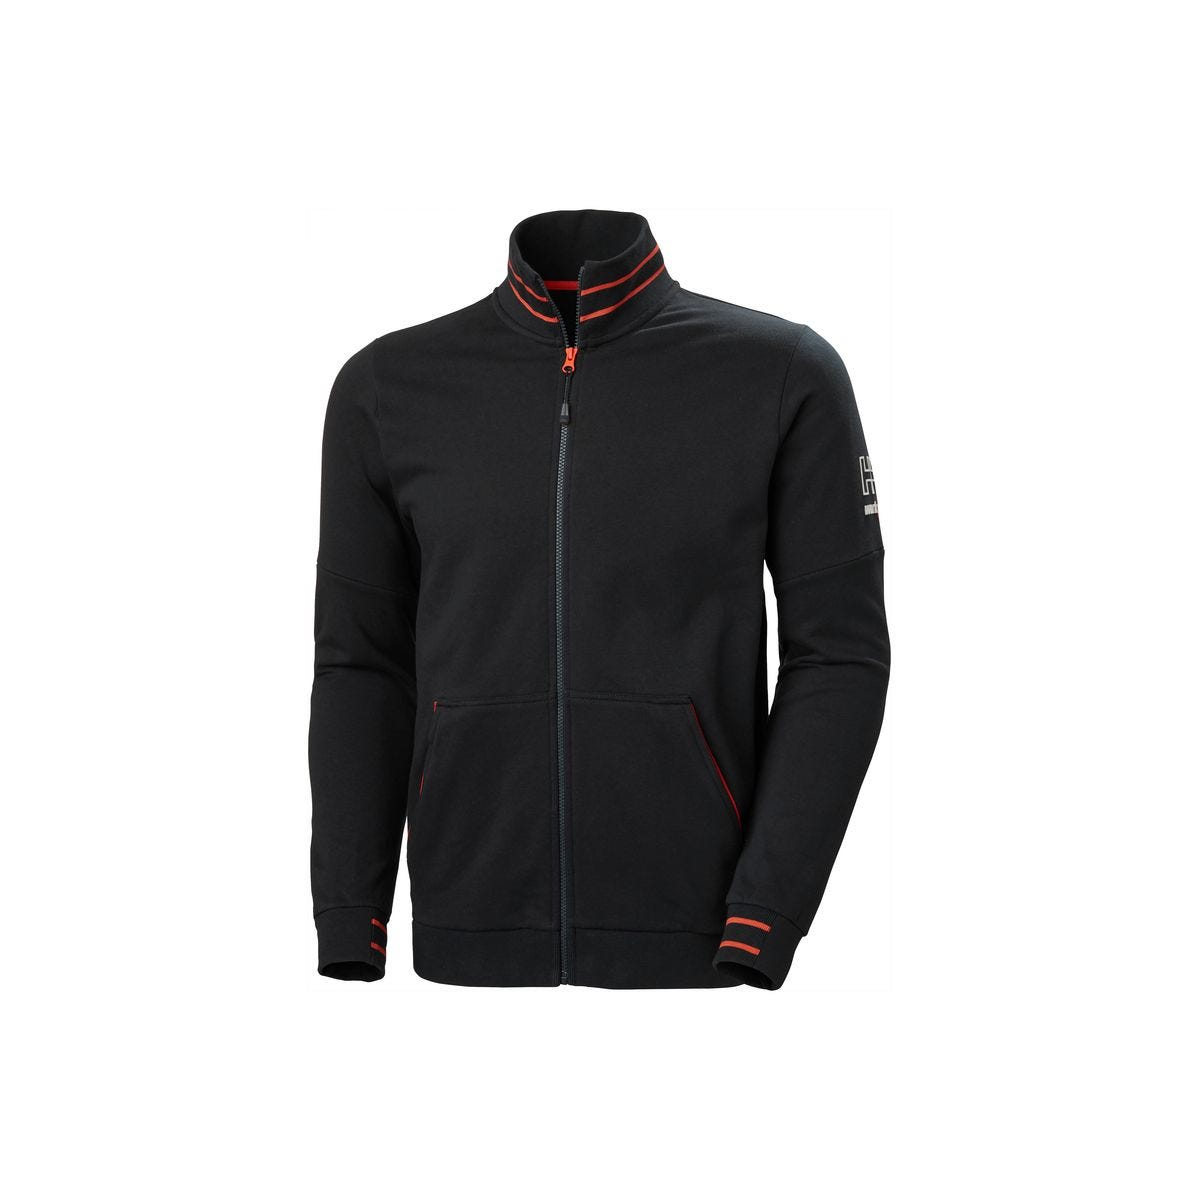 Sweat-shirt zippé noir kensington - HELLY HANSEN - Taille L 3